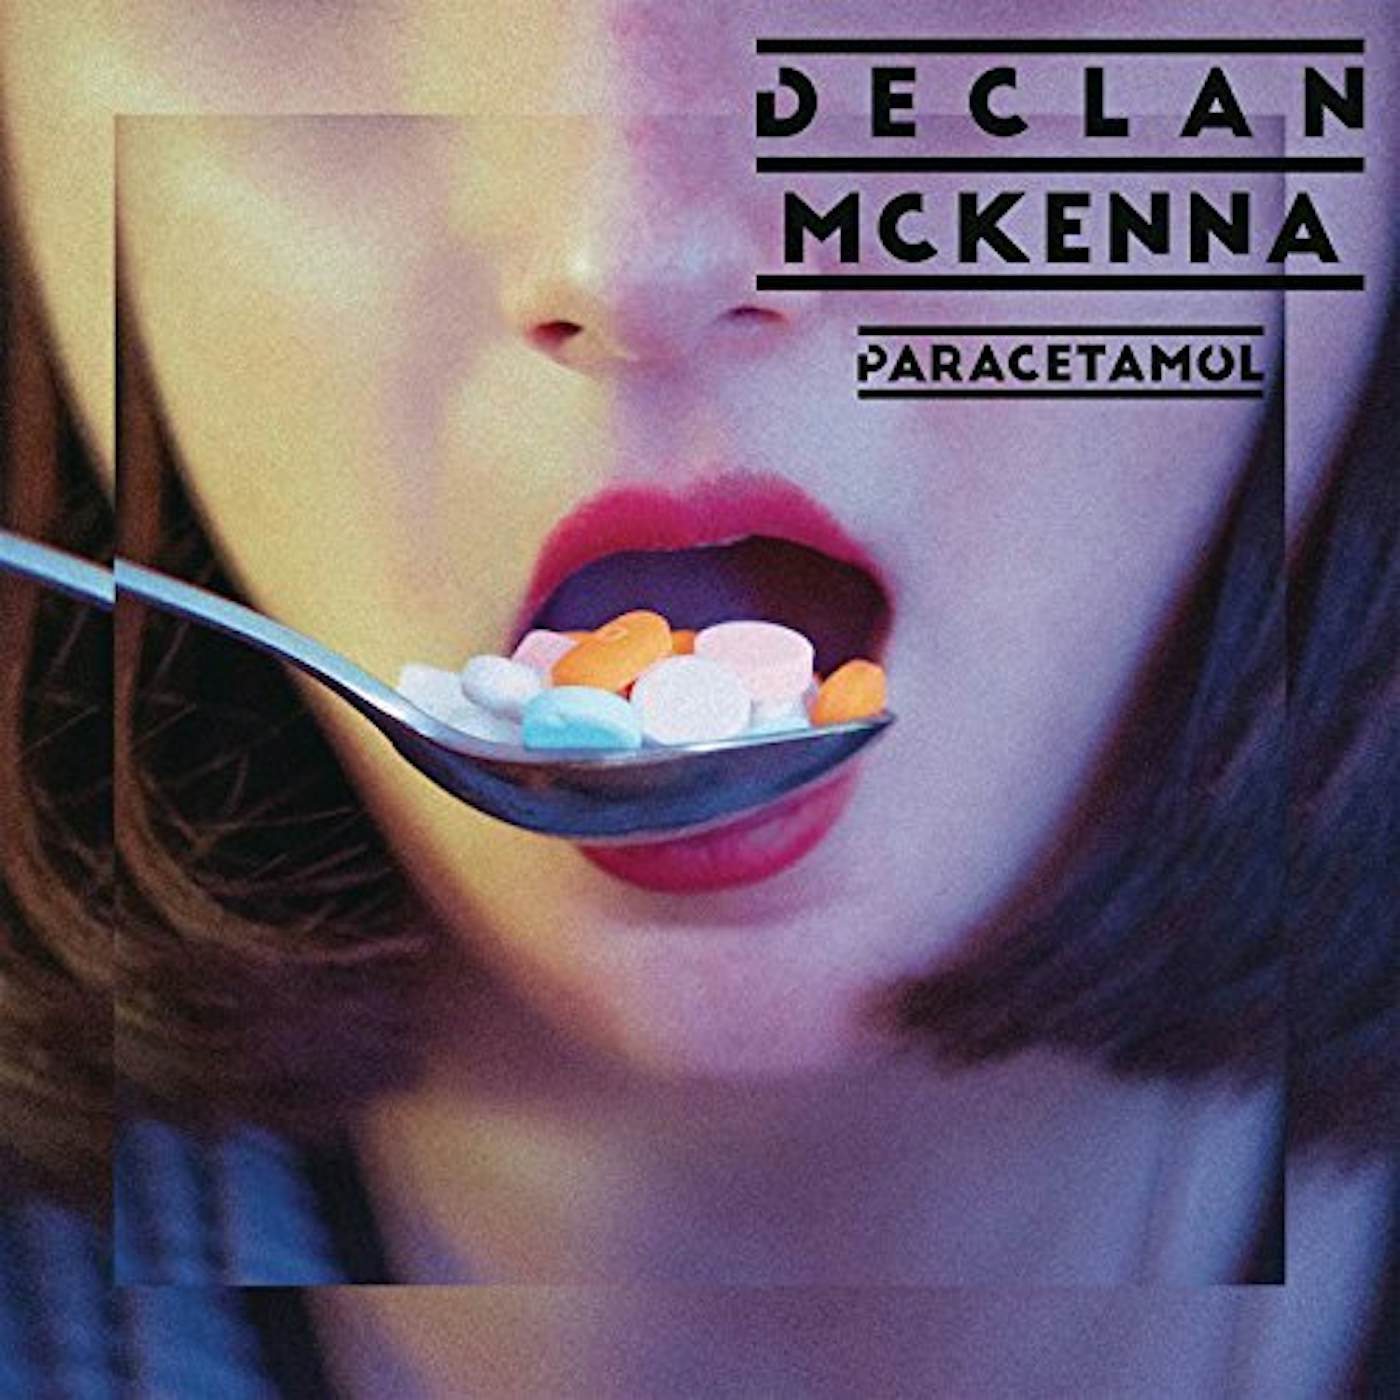 Declan McKenna PARACETAMOL Vinyl Record - UK Release